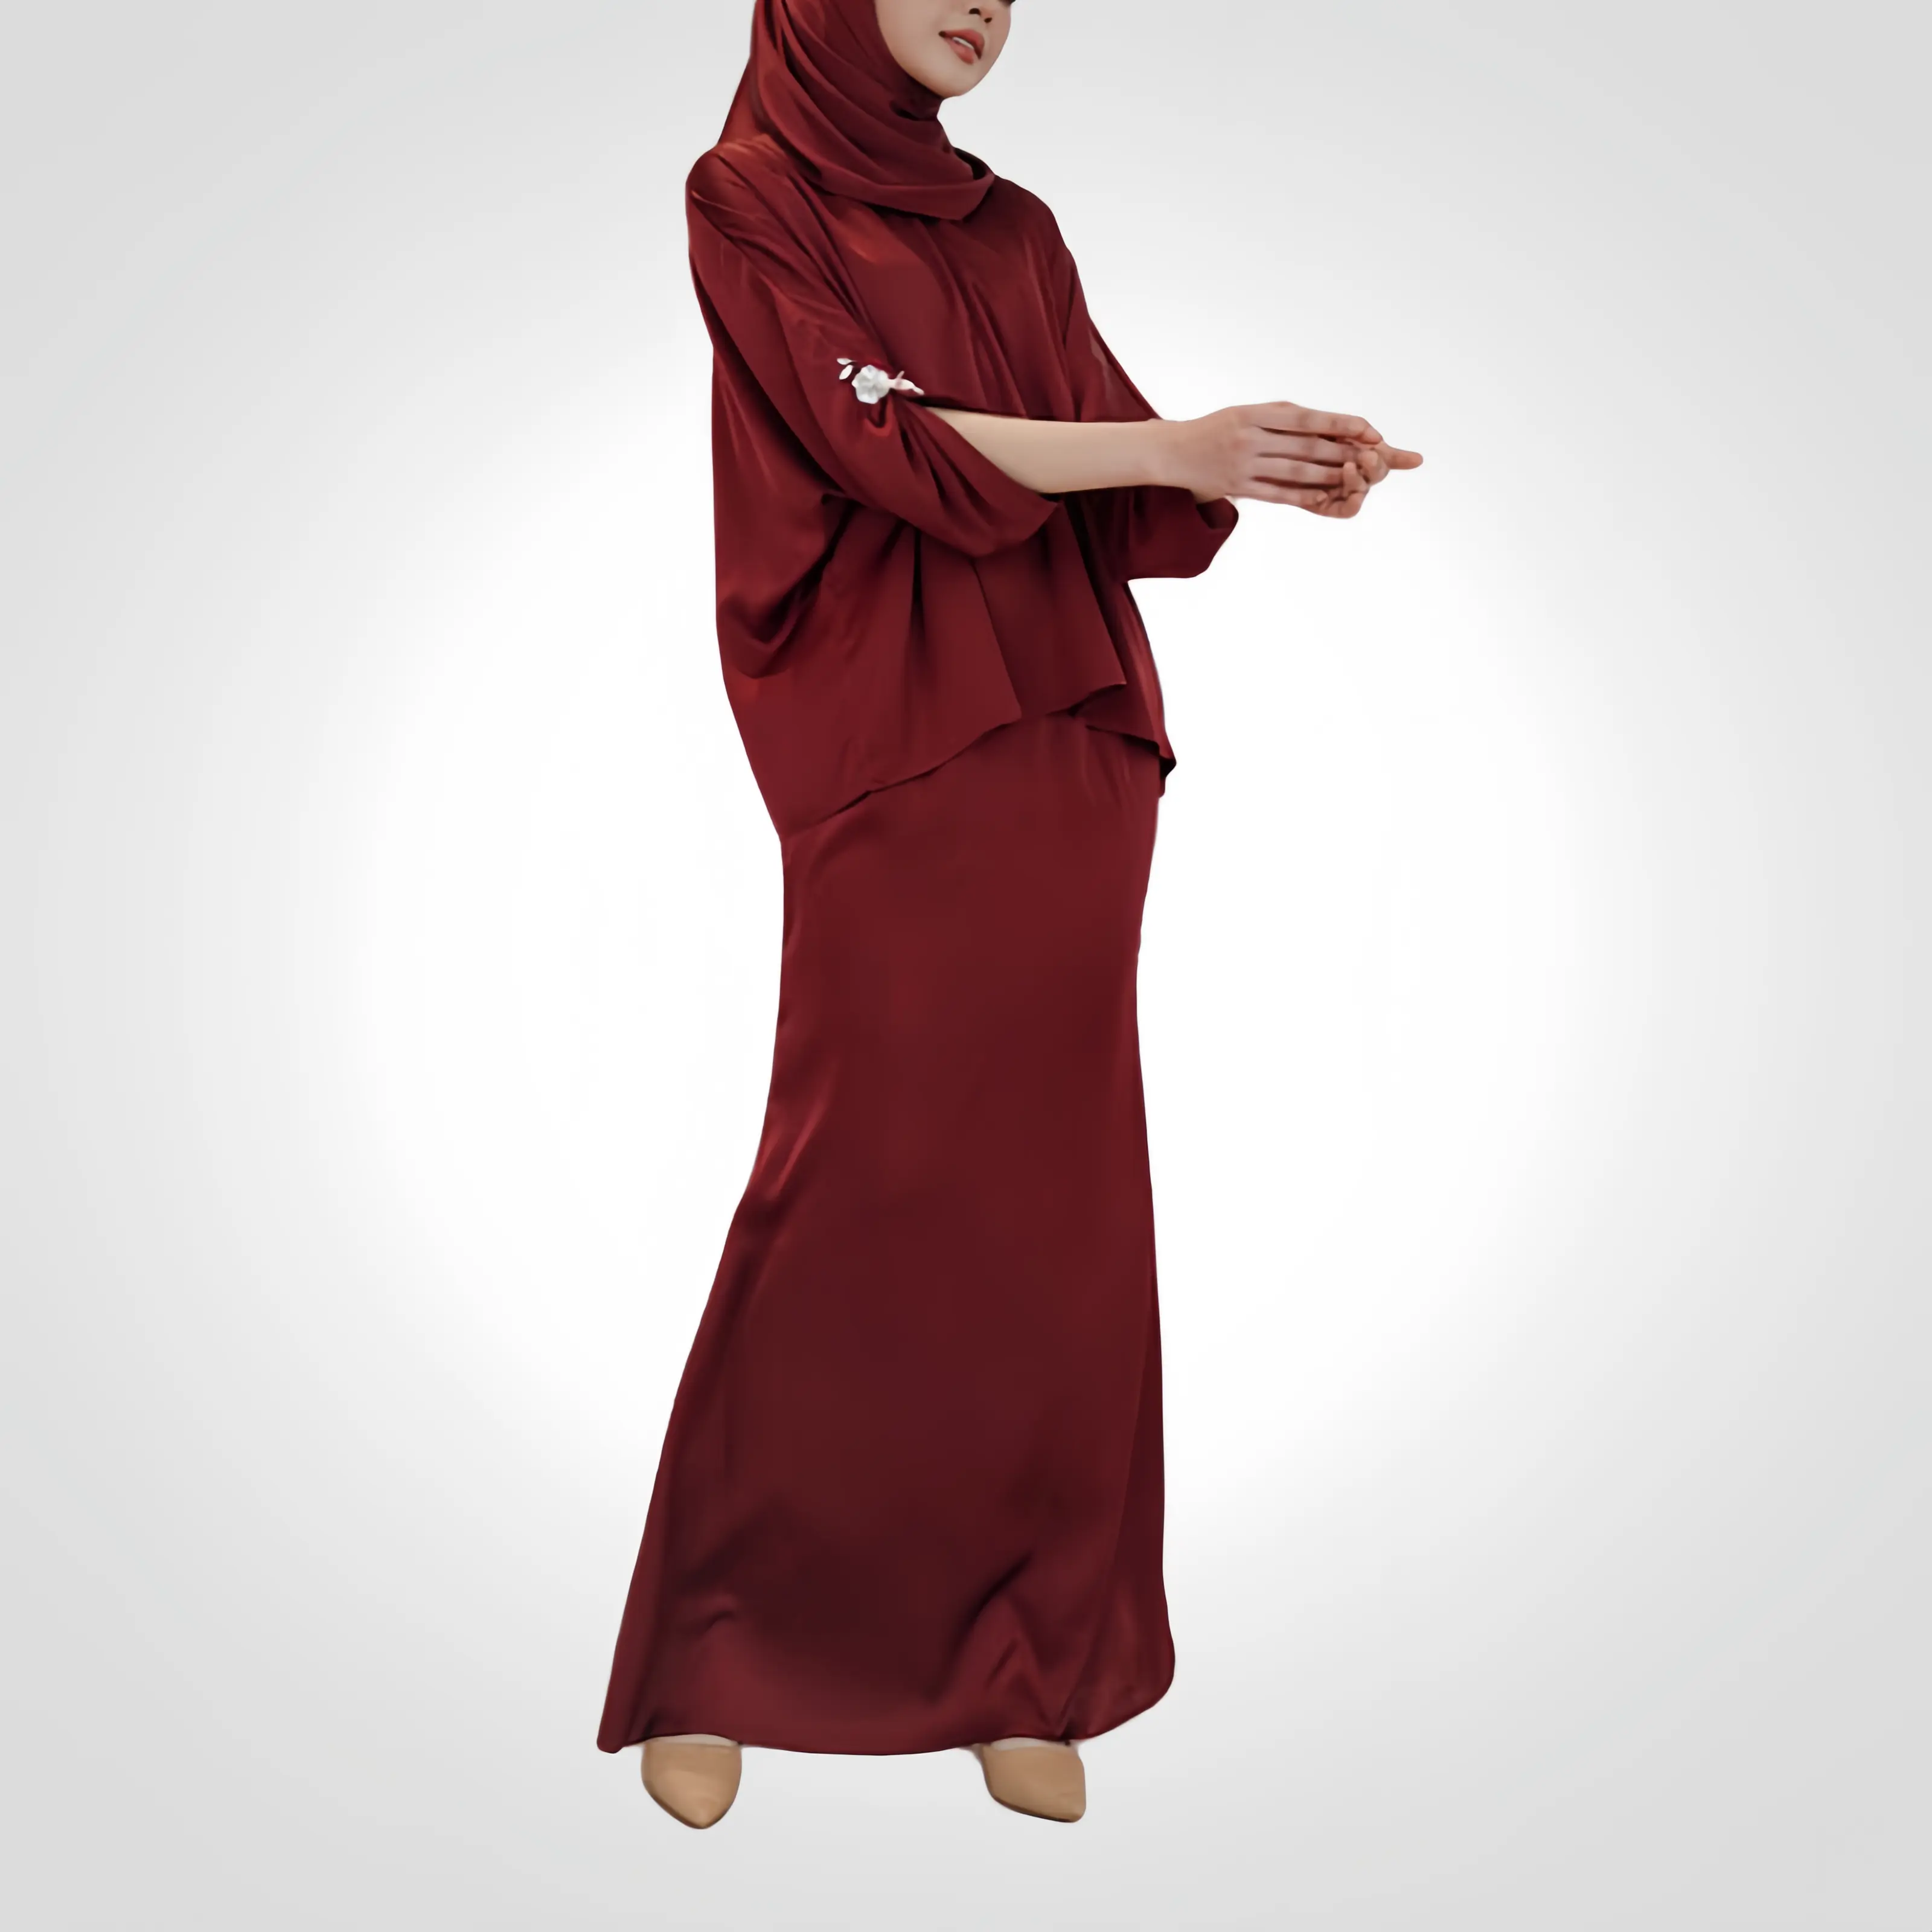 SIPO Wholesale Kurung Moden Wide Sleeves Pleated With Beads Traditional Muslim Clothing Muslim Dress Baju Kurung